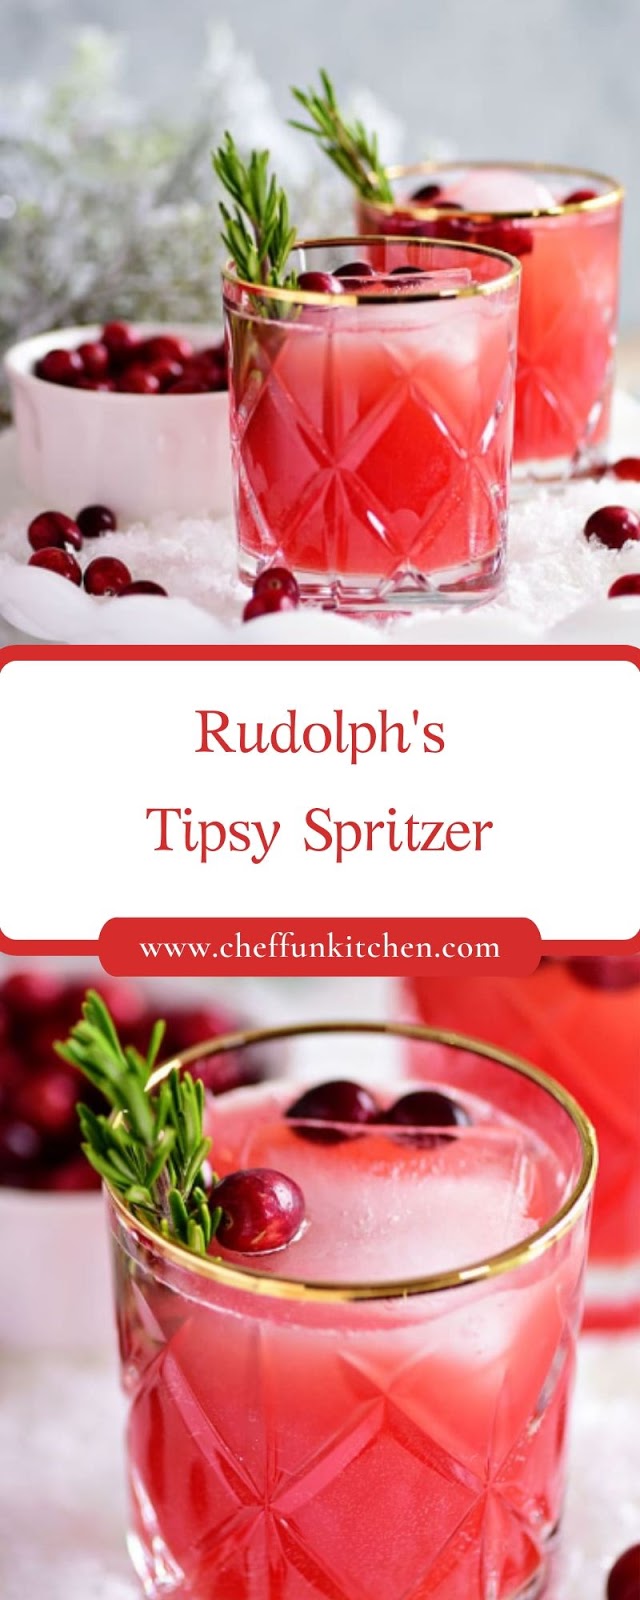 Rudolph's Tipsy Spritzer